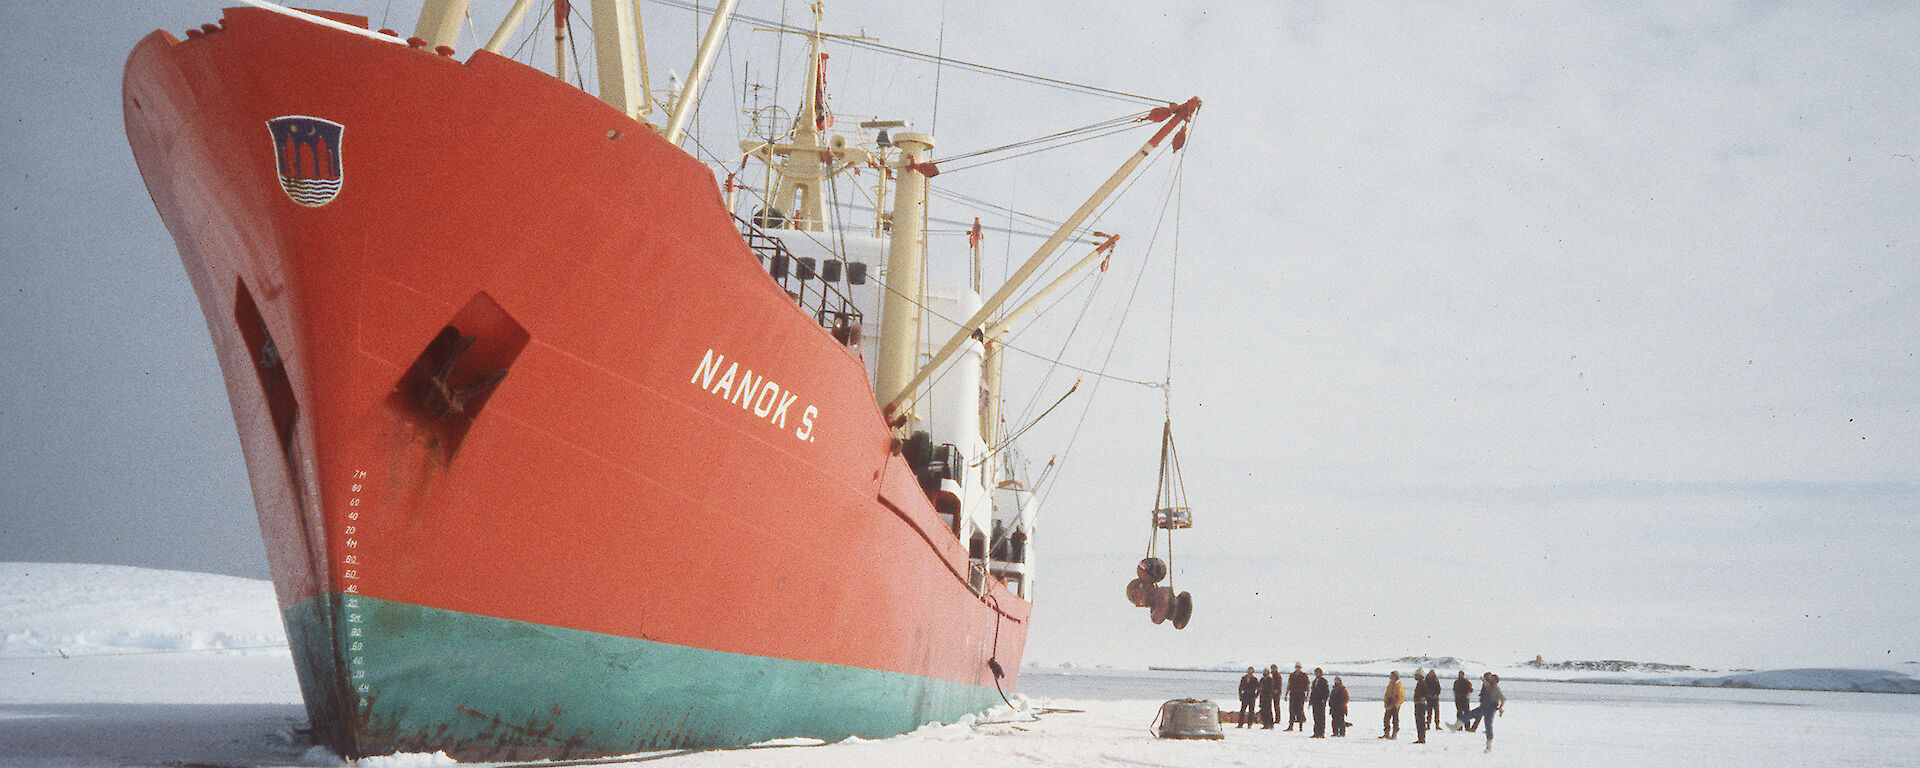 An orange ship unloading cargo with a crane onto the ice.